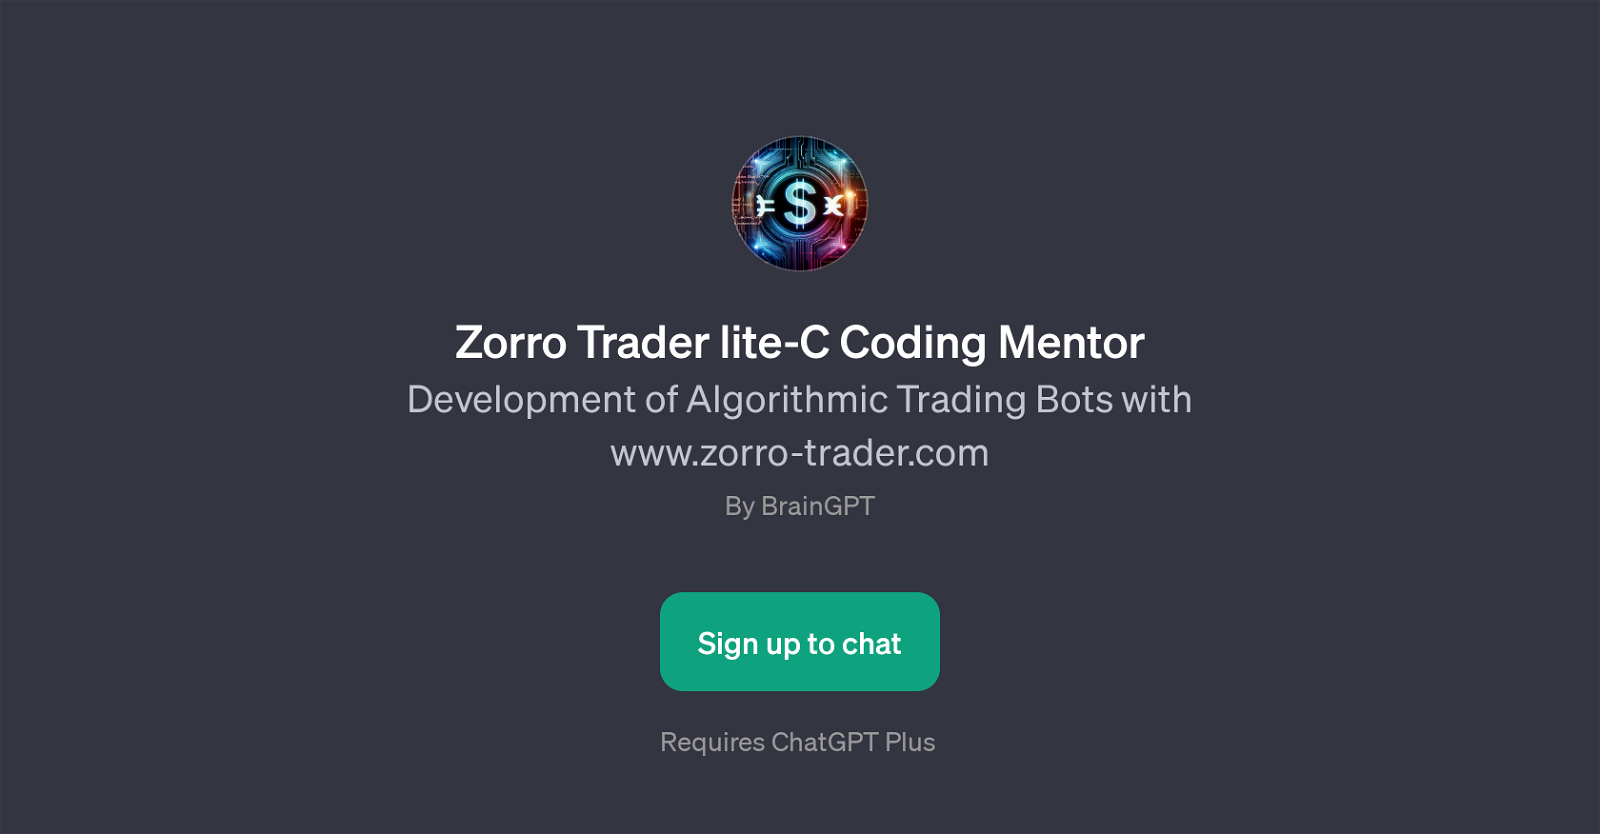 Zorro Trader lite-C Coding Mentor website